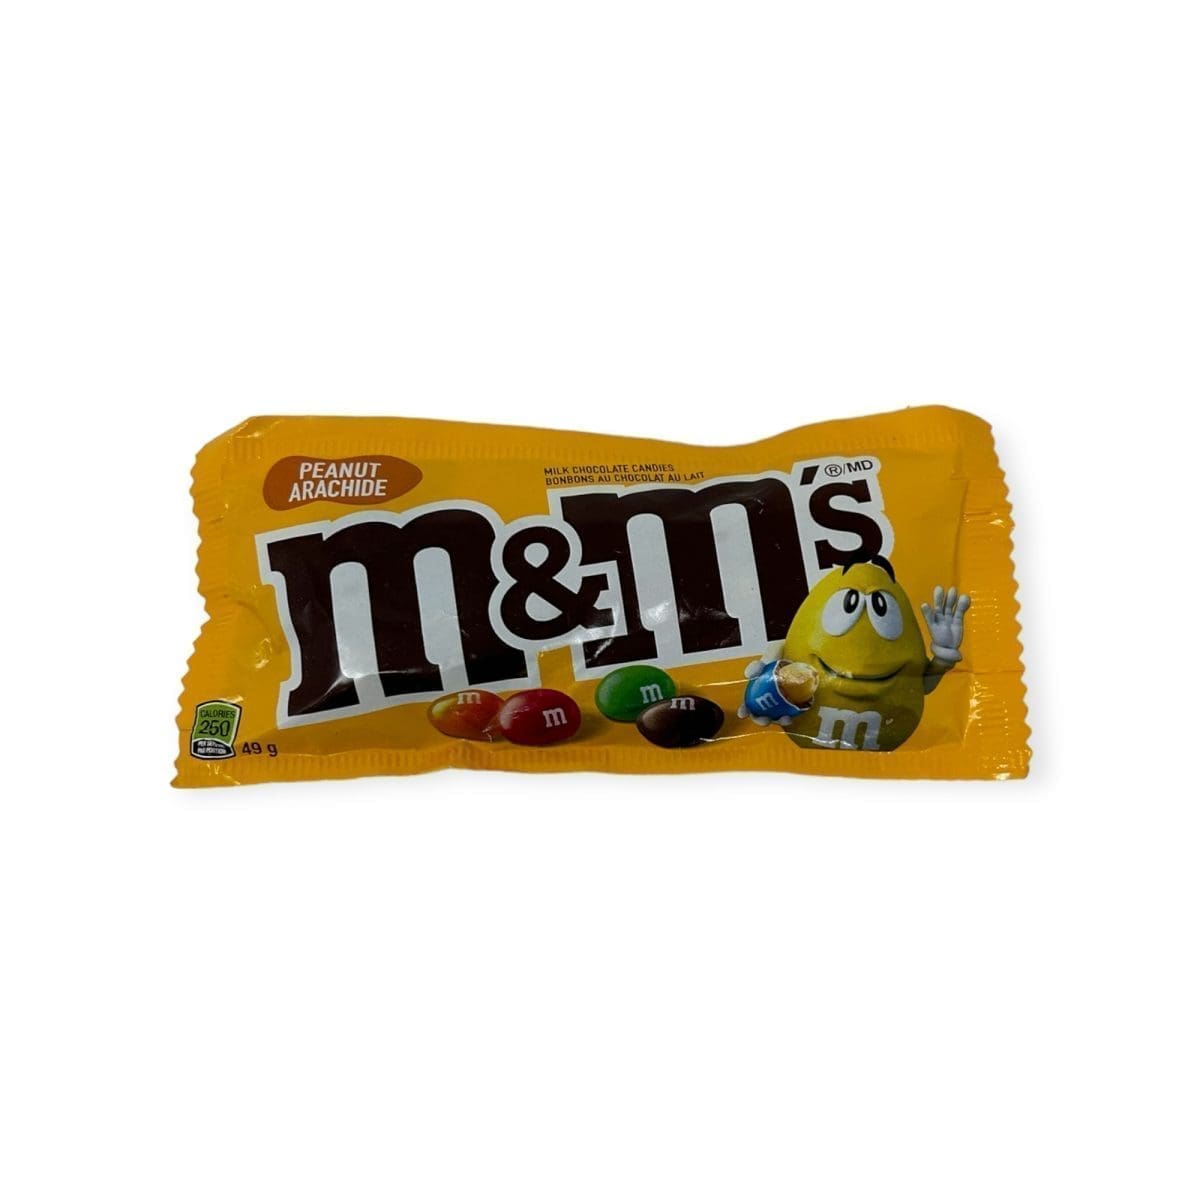 M&m’s Peanut Milk Chocolate Candies (49g)